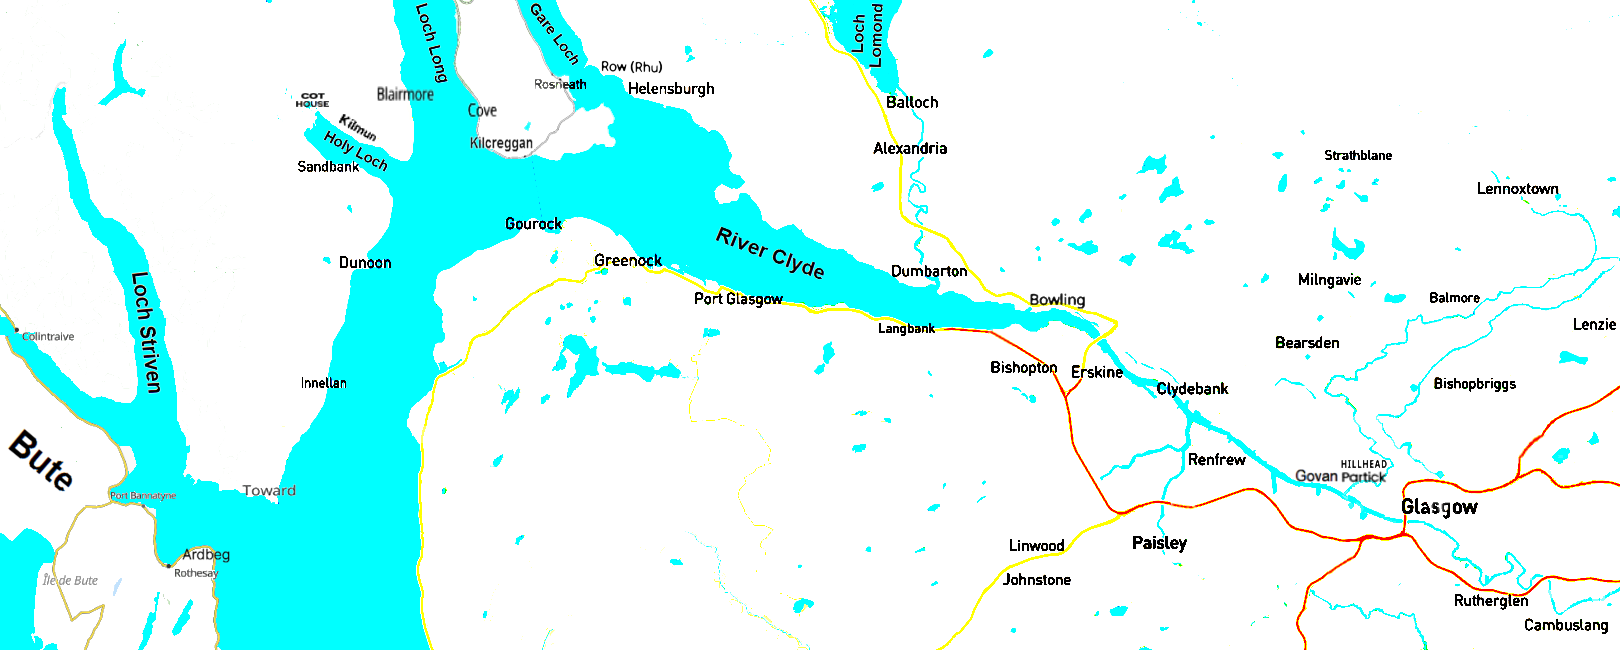 West Highland Telegraph system map - 2